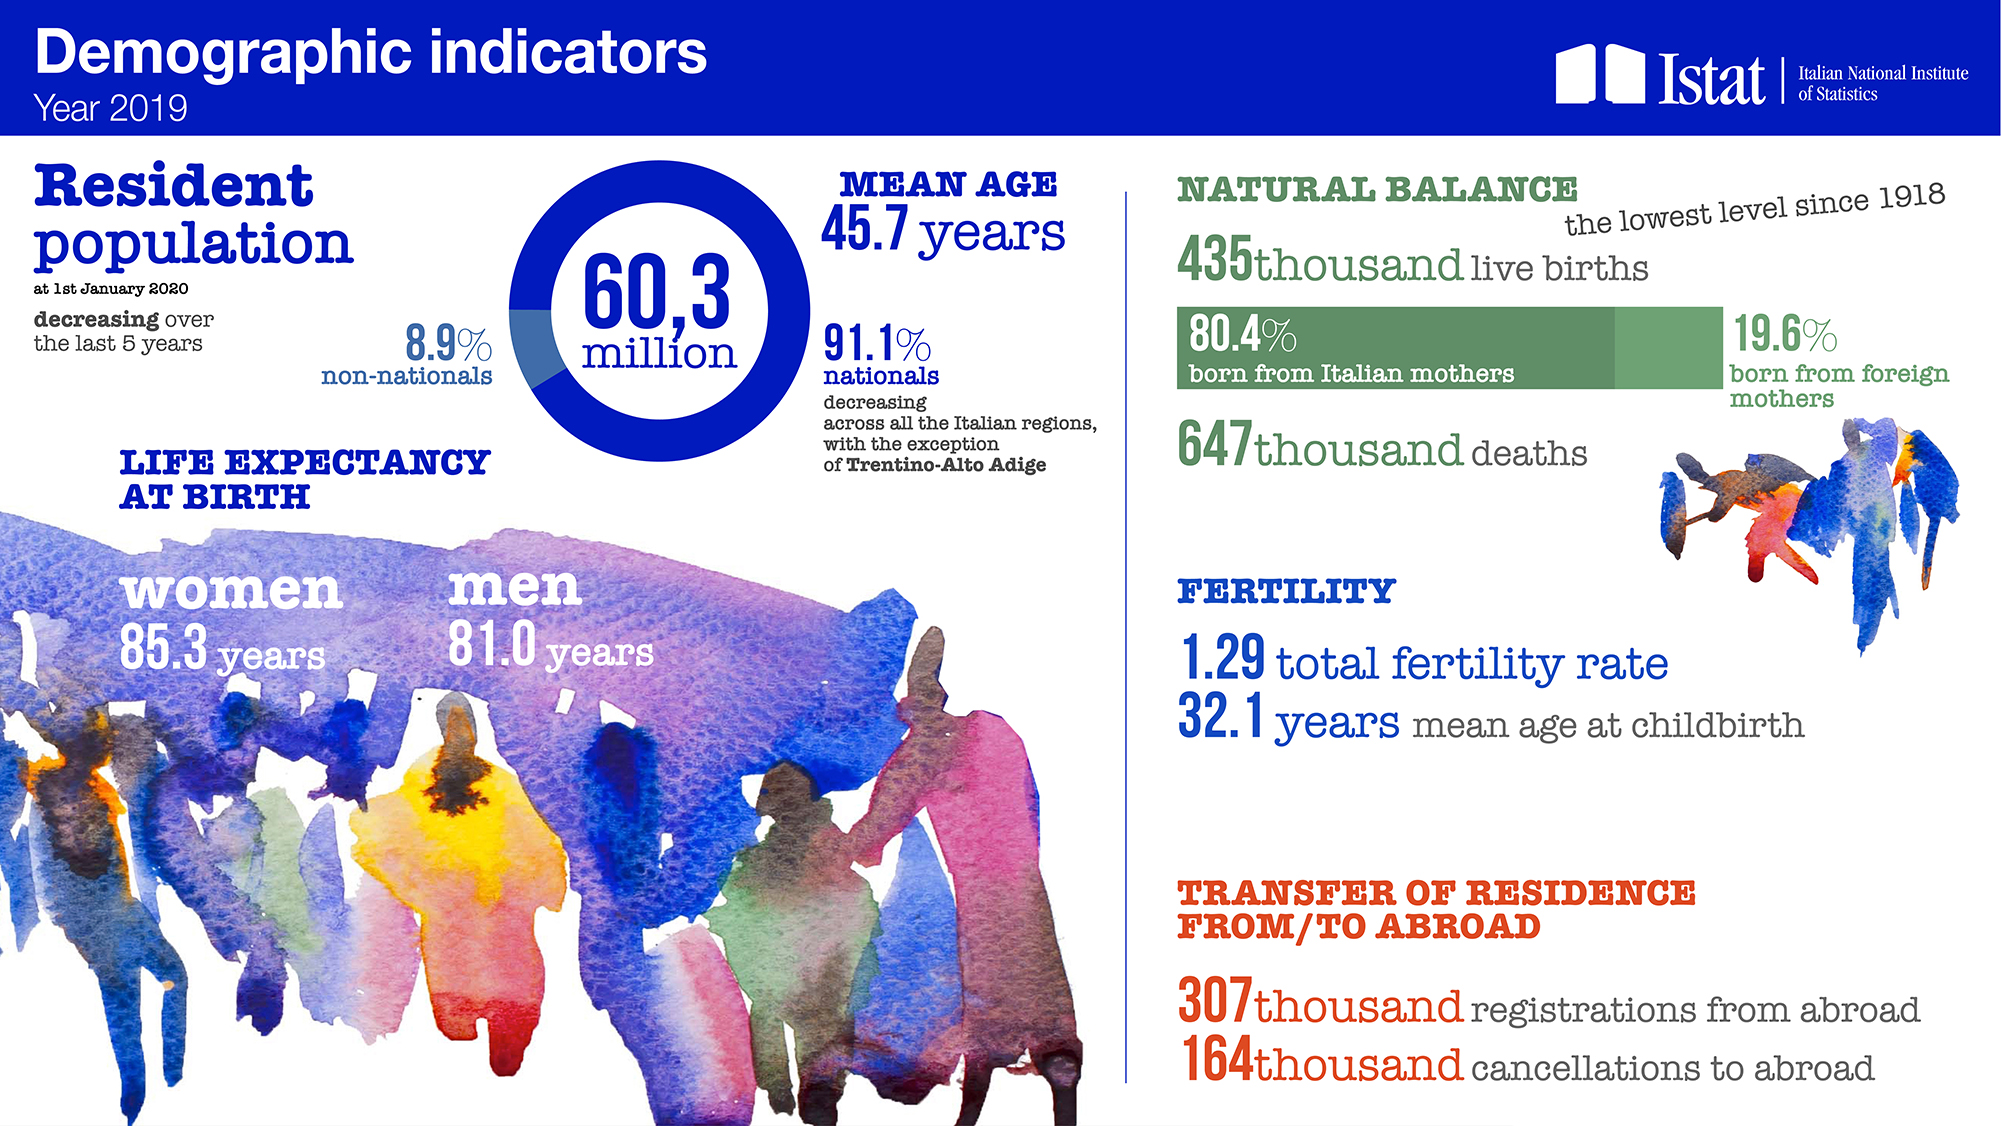 Infographic on demographic indicators